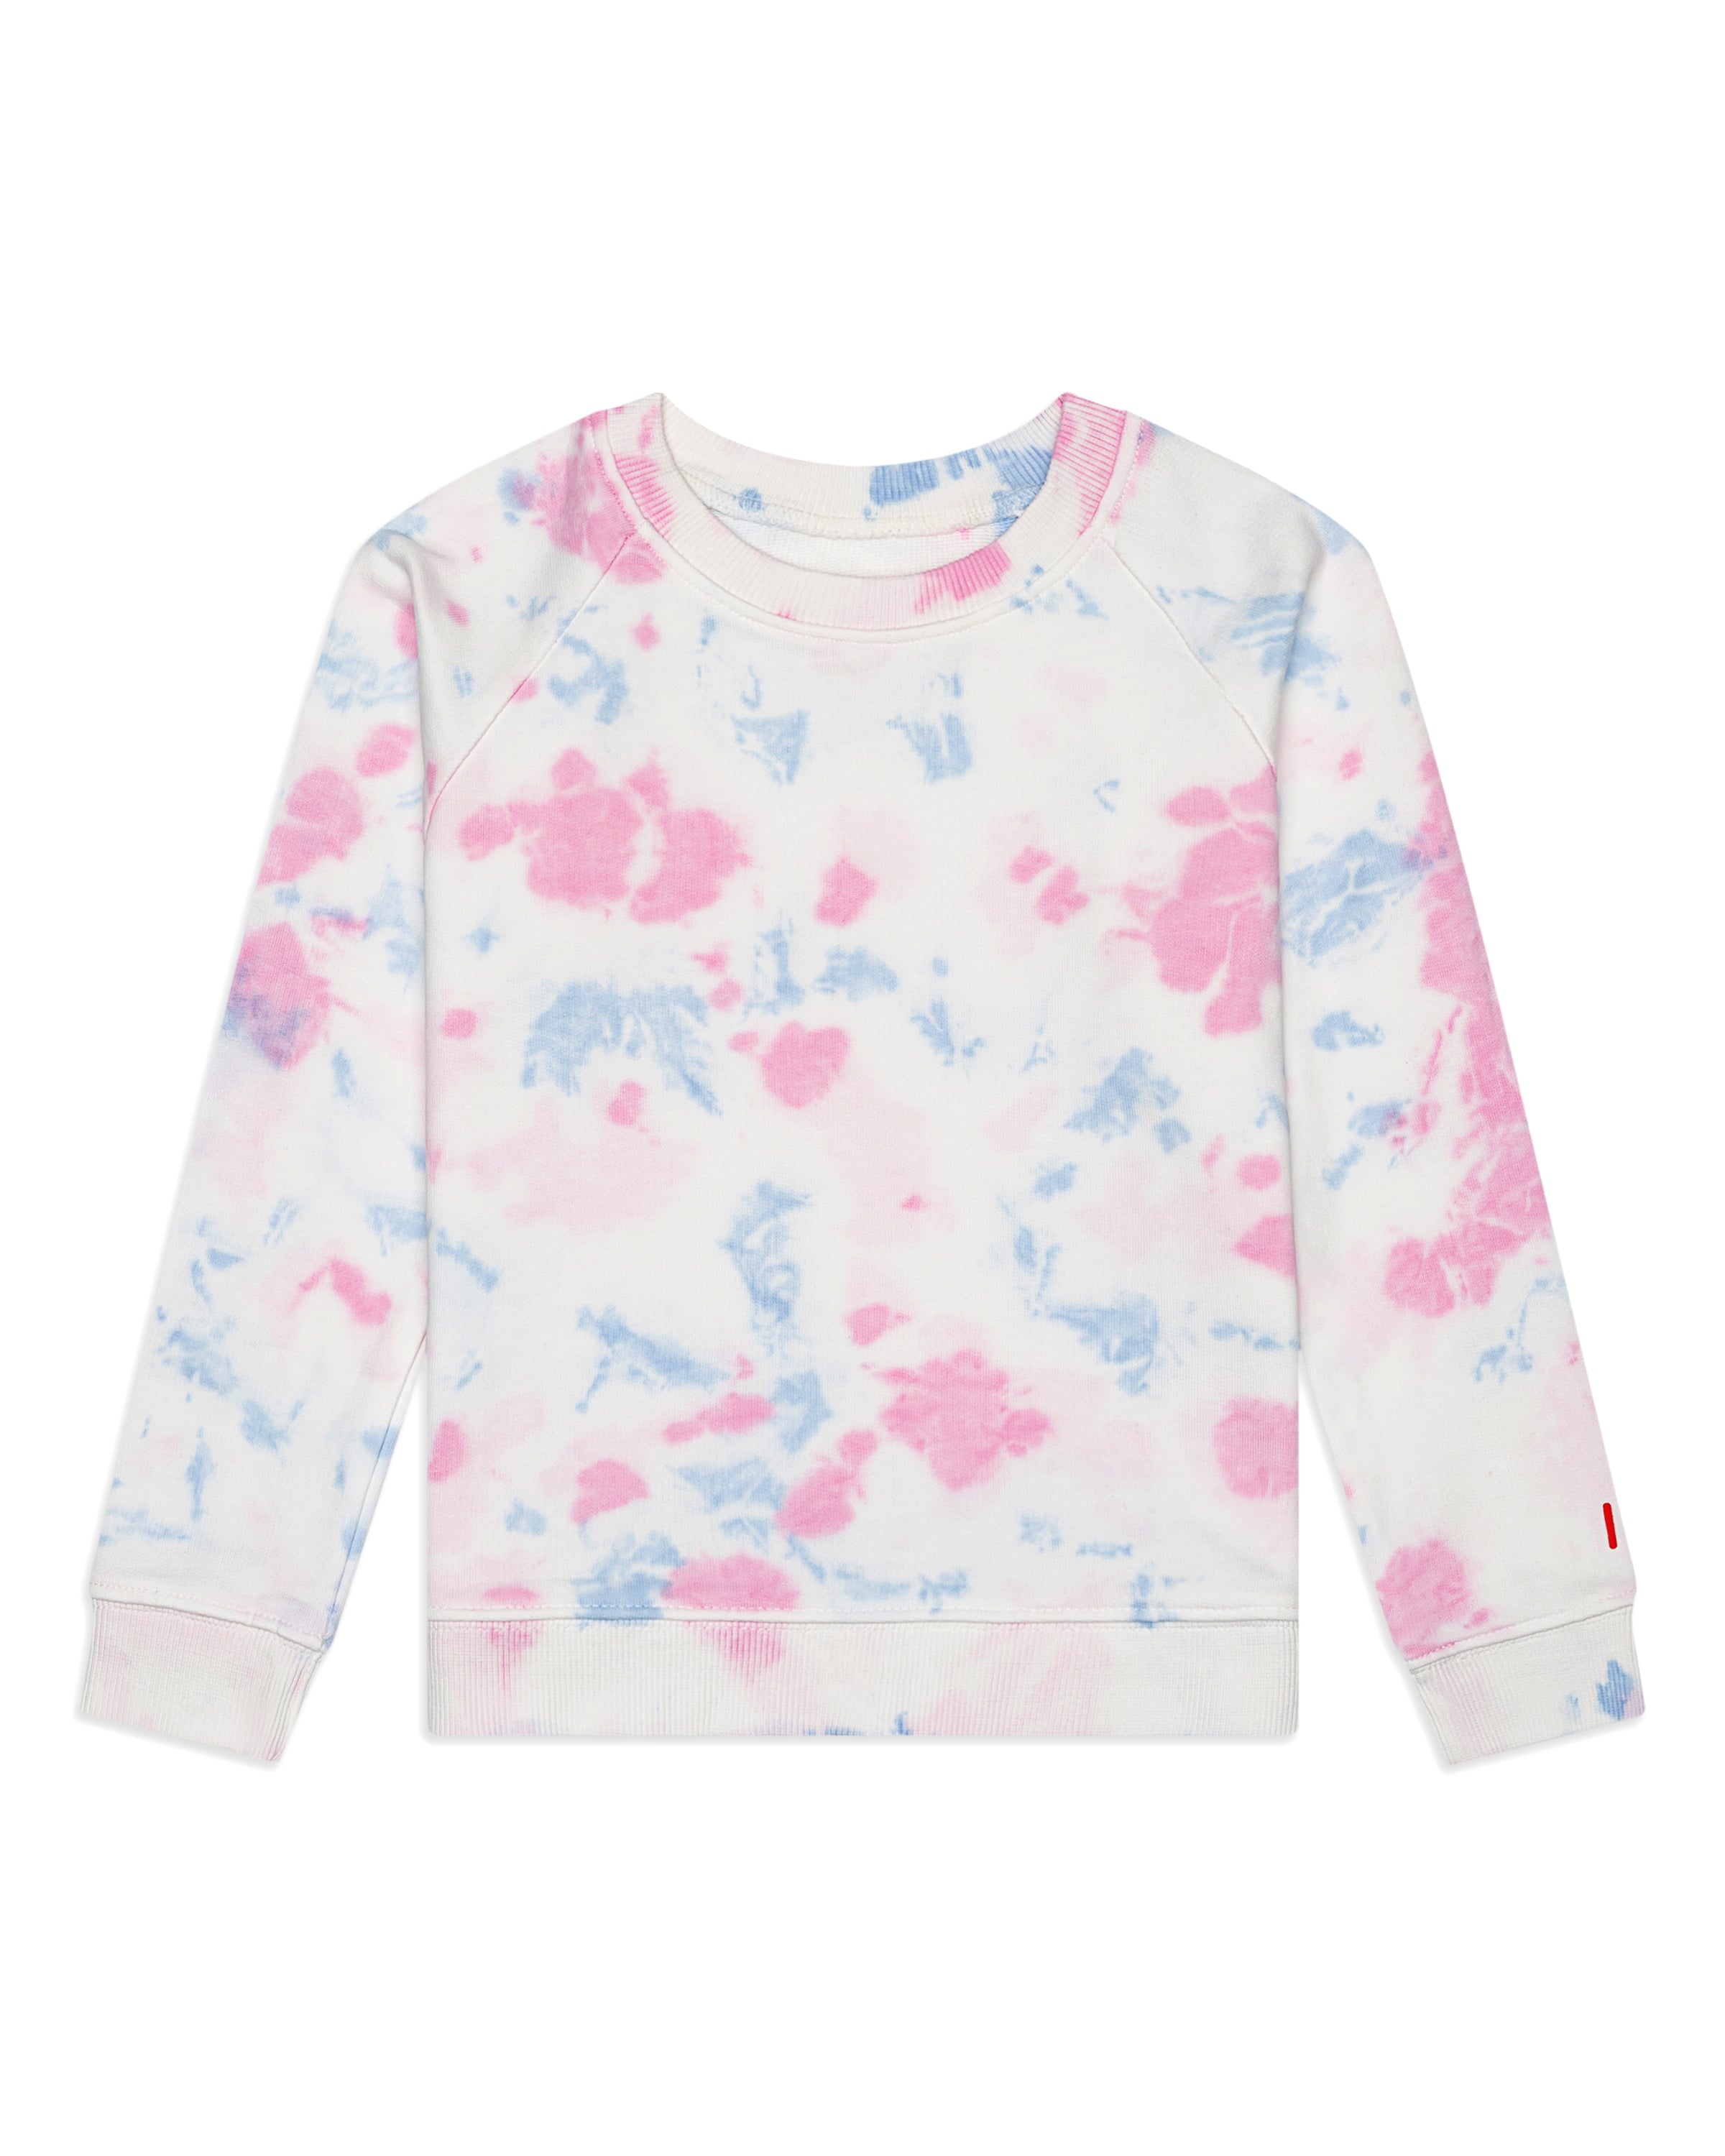 The Organic Printed Pullover Sweatshirt [Pastel Marble]